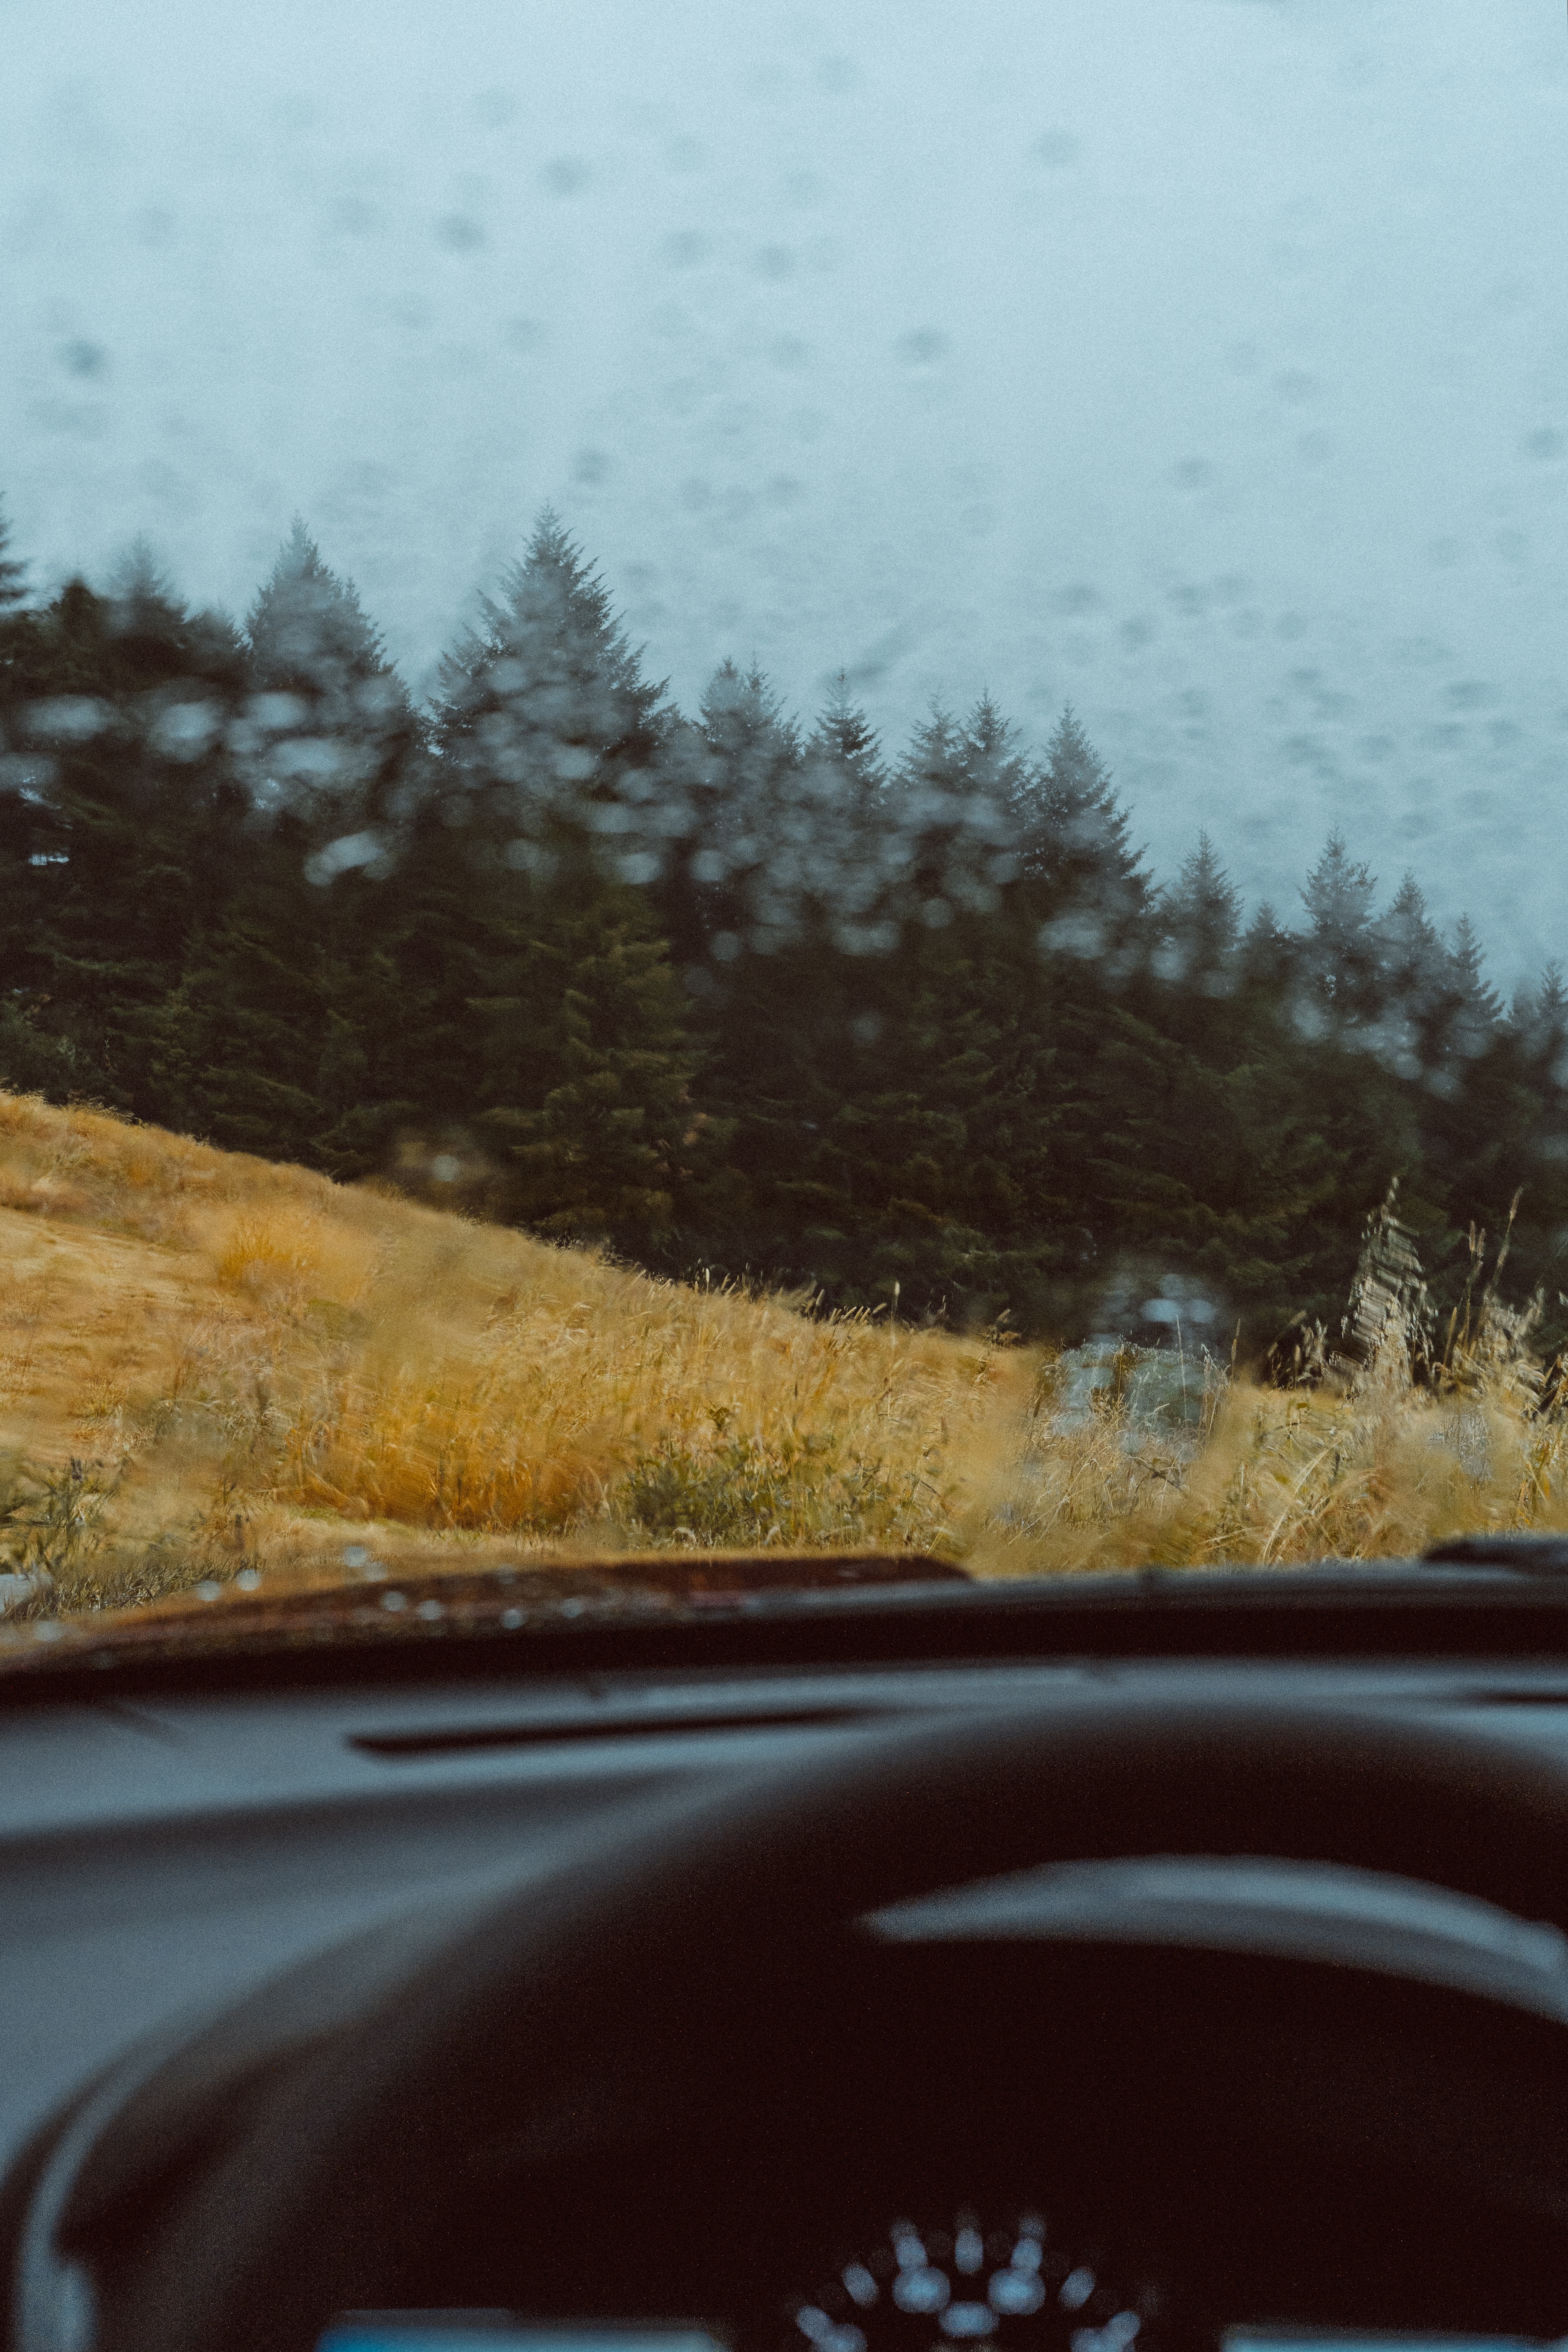 Desktop FHD rain, miscellanea, miscellaneous, forest, car, machine, glass, view